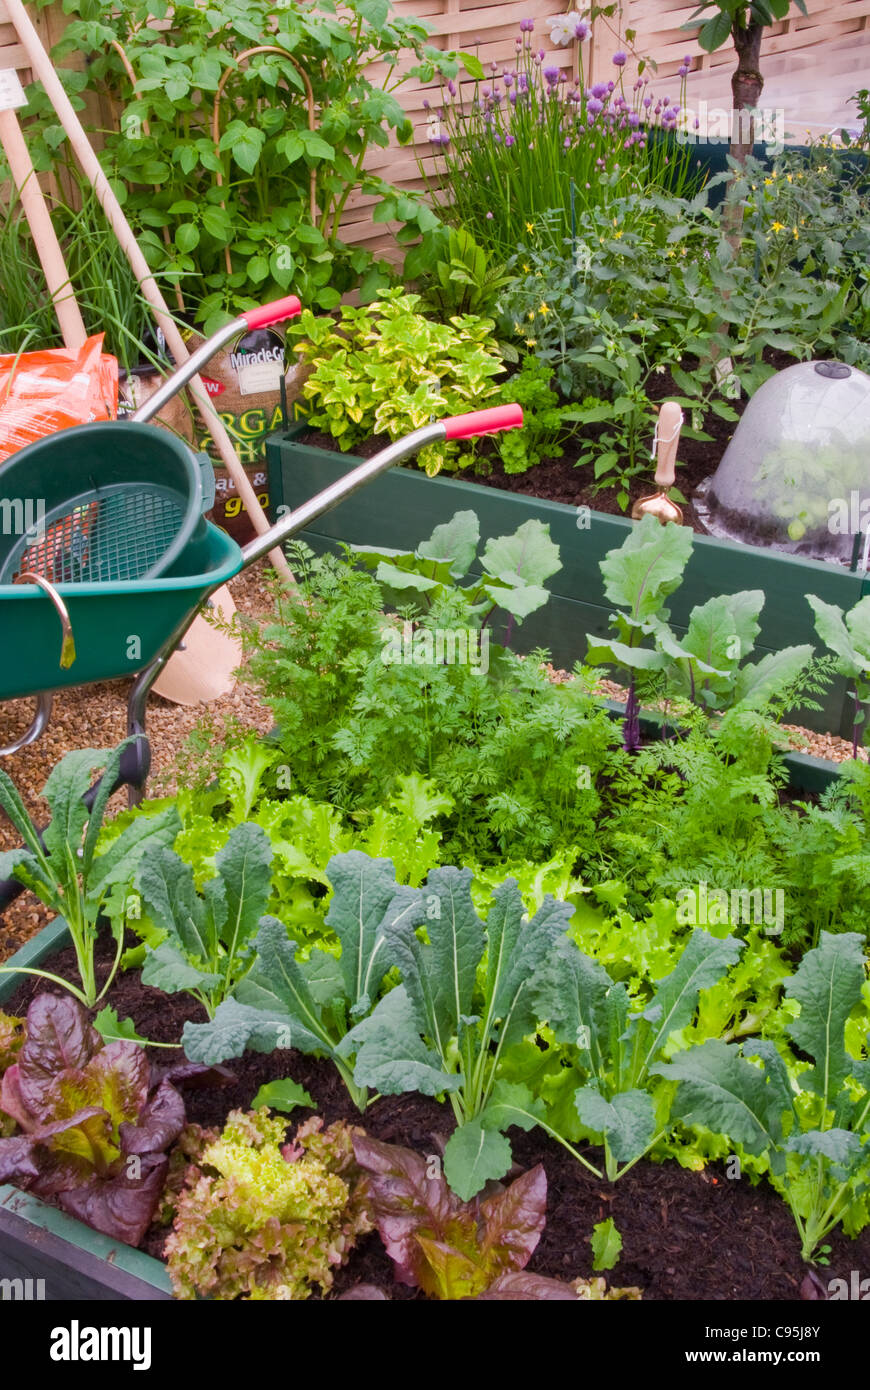 Vegetable Garden backyard home with wheelbarrow, cloche coldframe, raised beds, plants lettuce, kale, carrots, herbs living Stock Photo